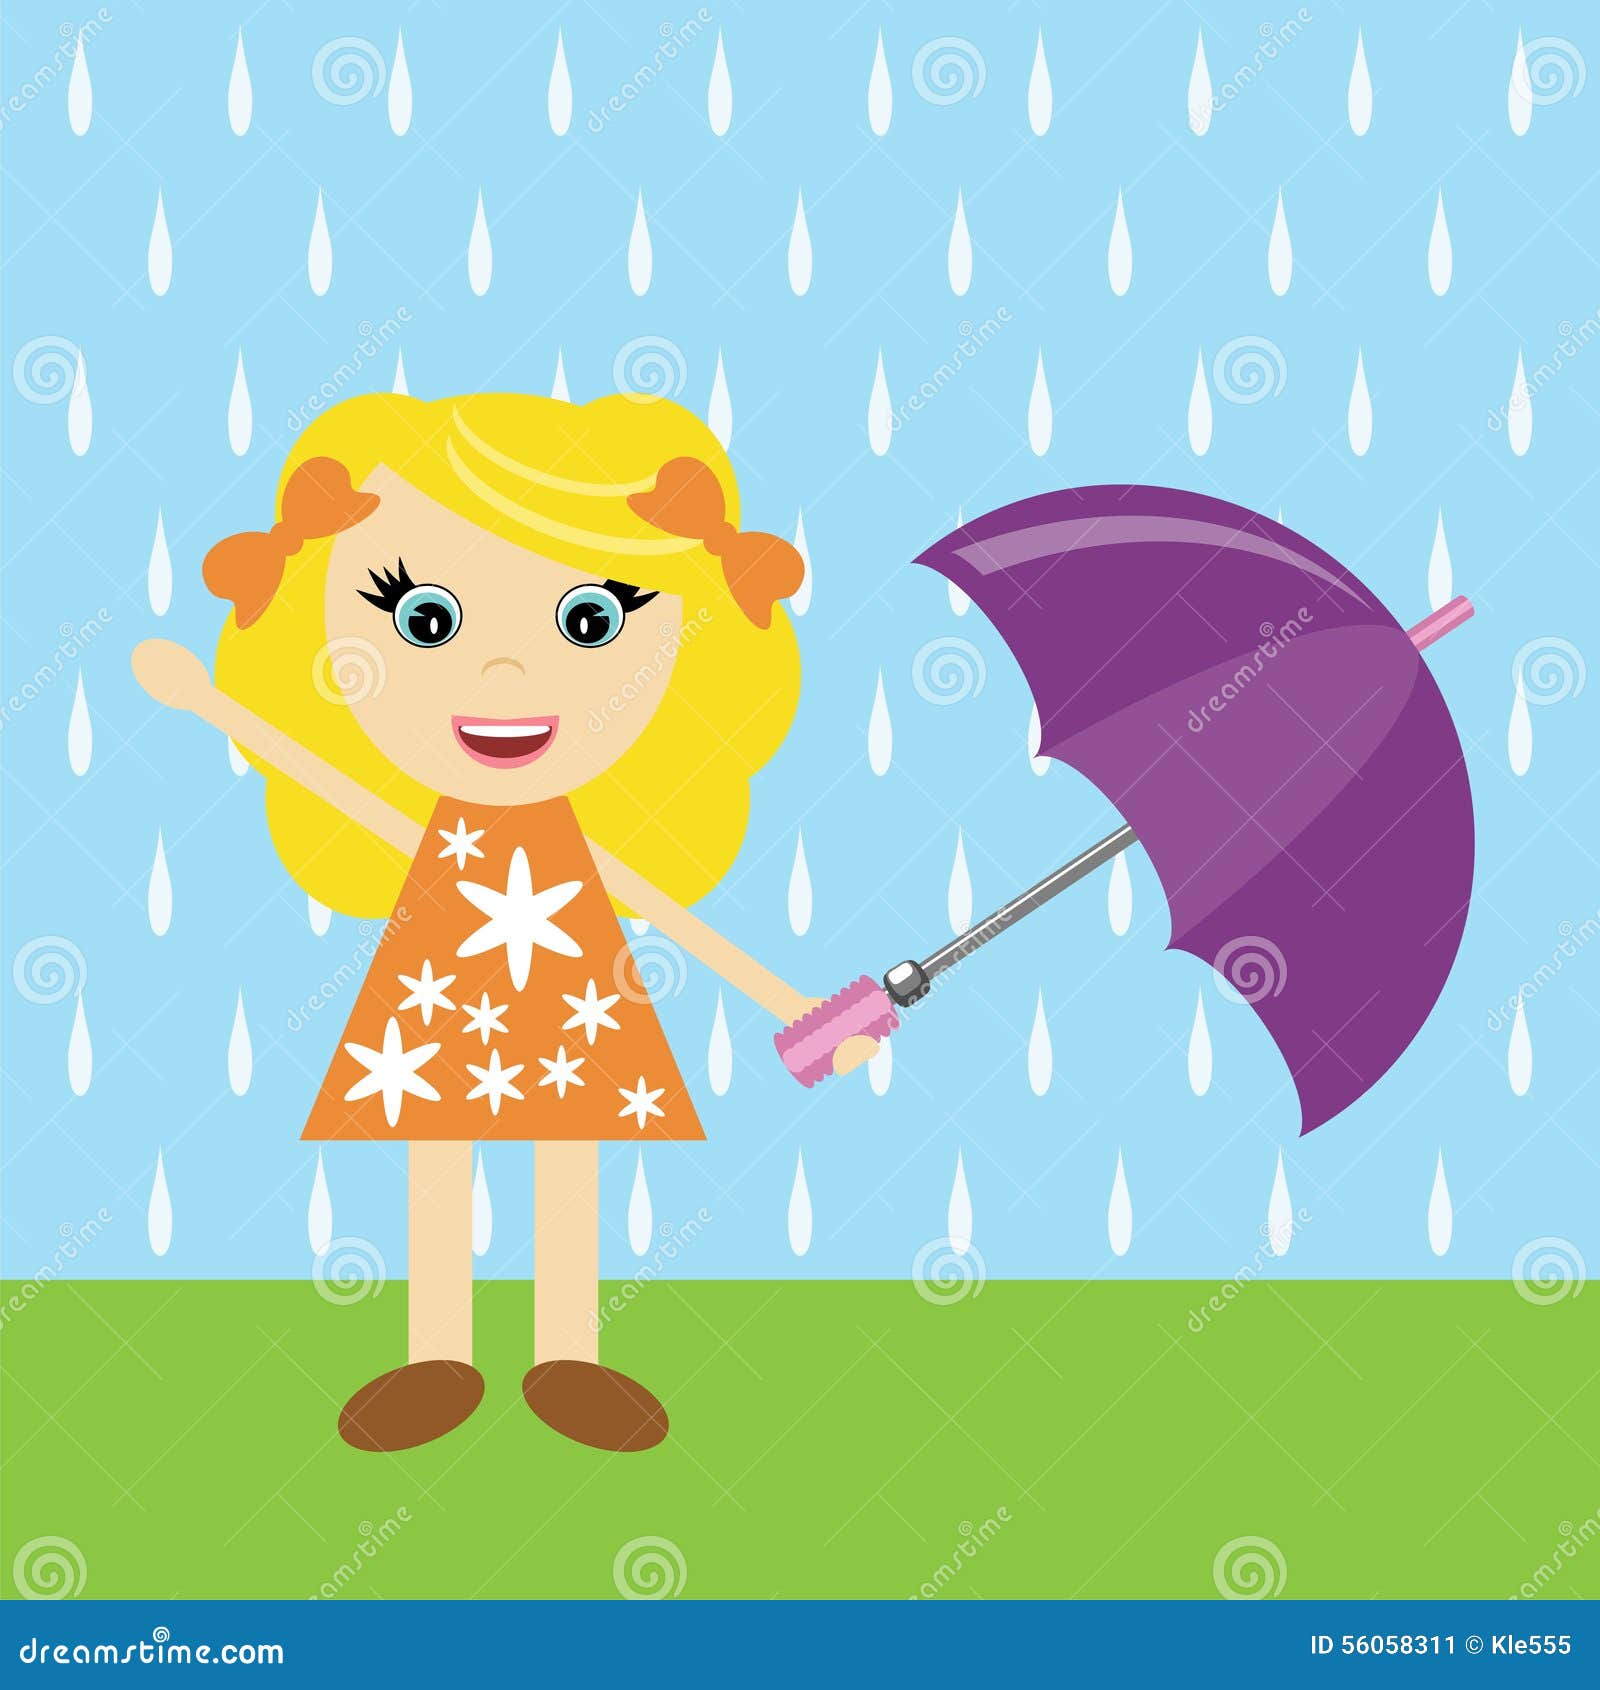 Girl with umbrella stock illustration. Illustration of rain - 56058311